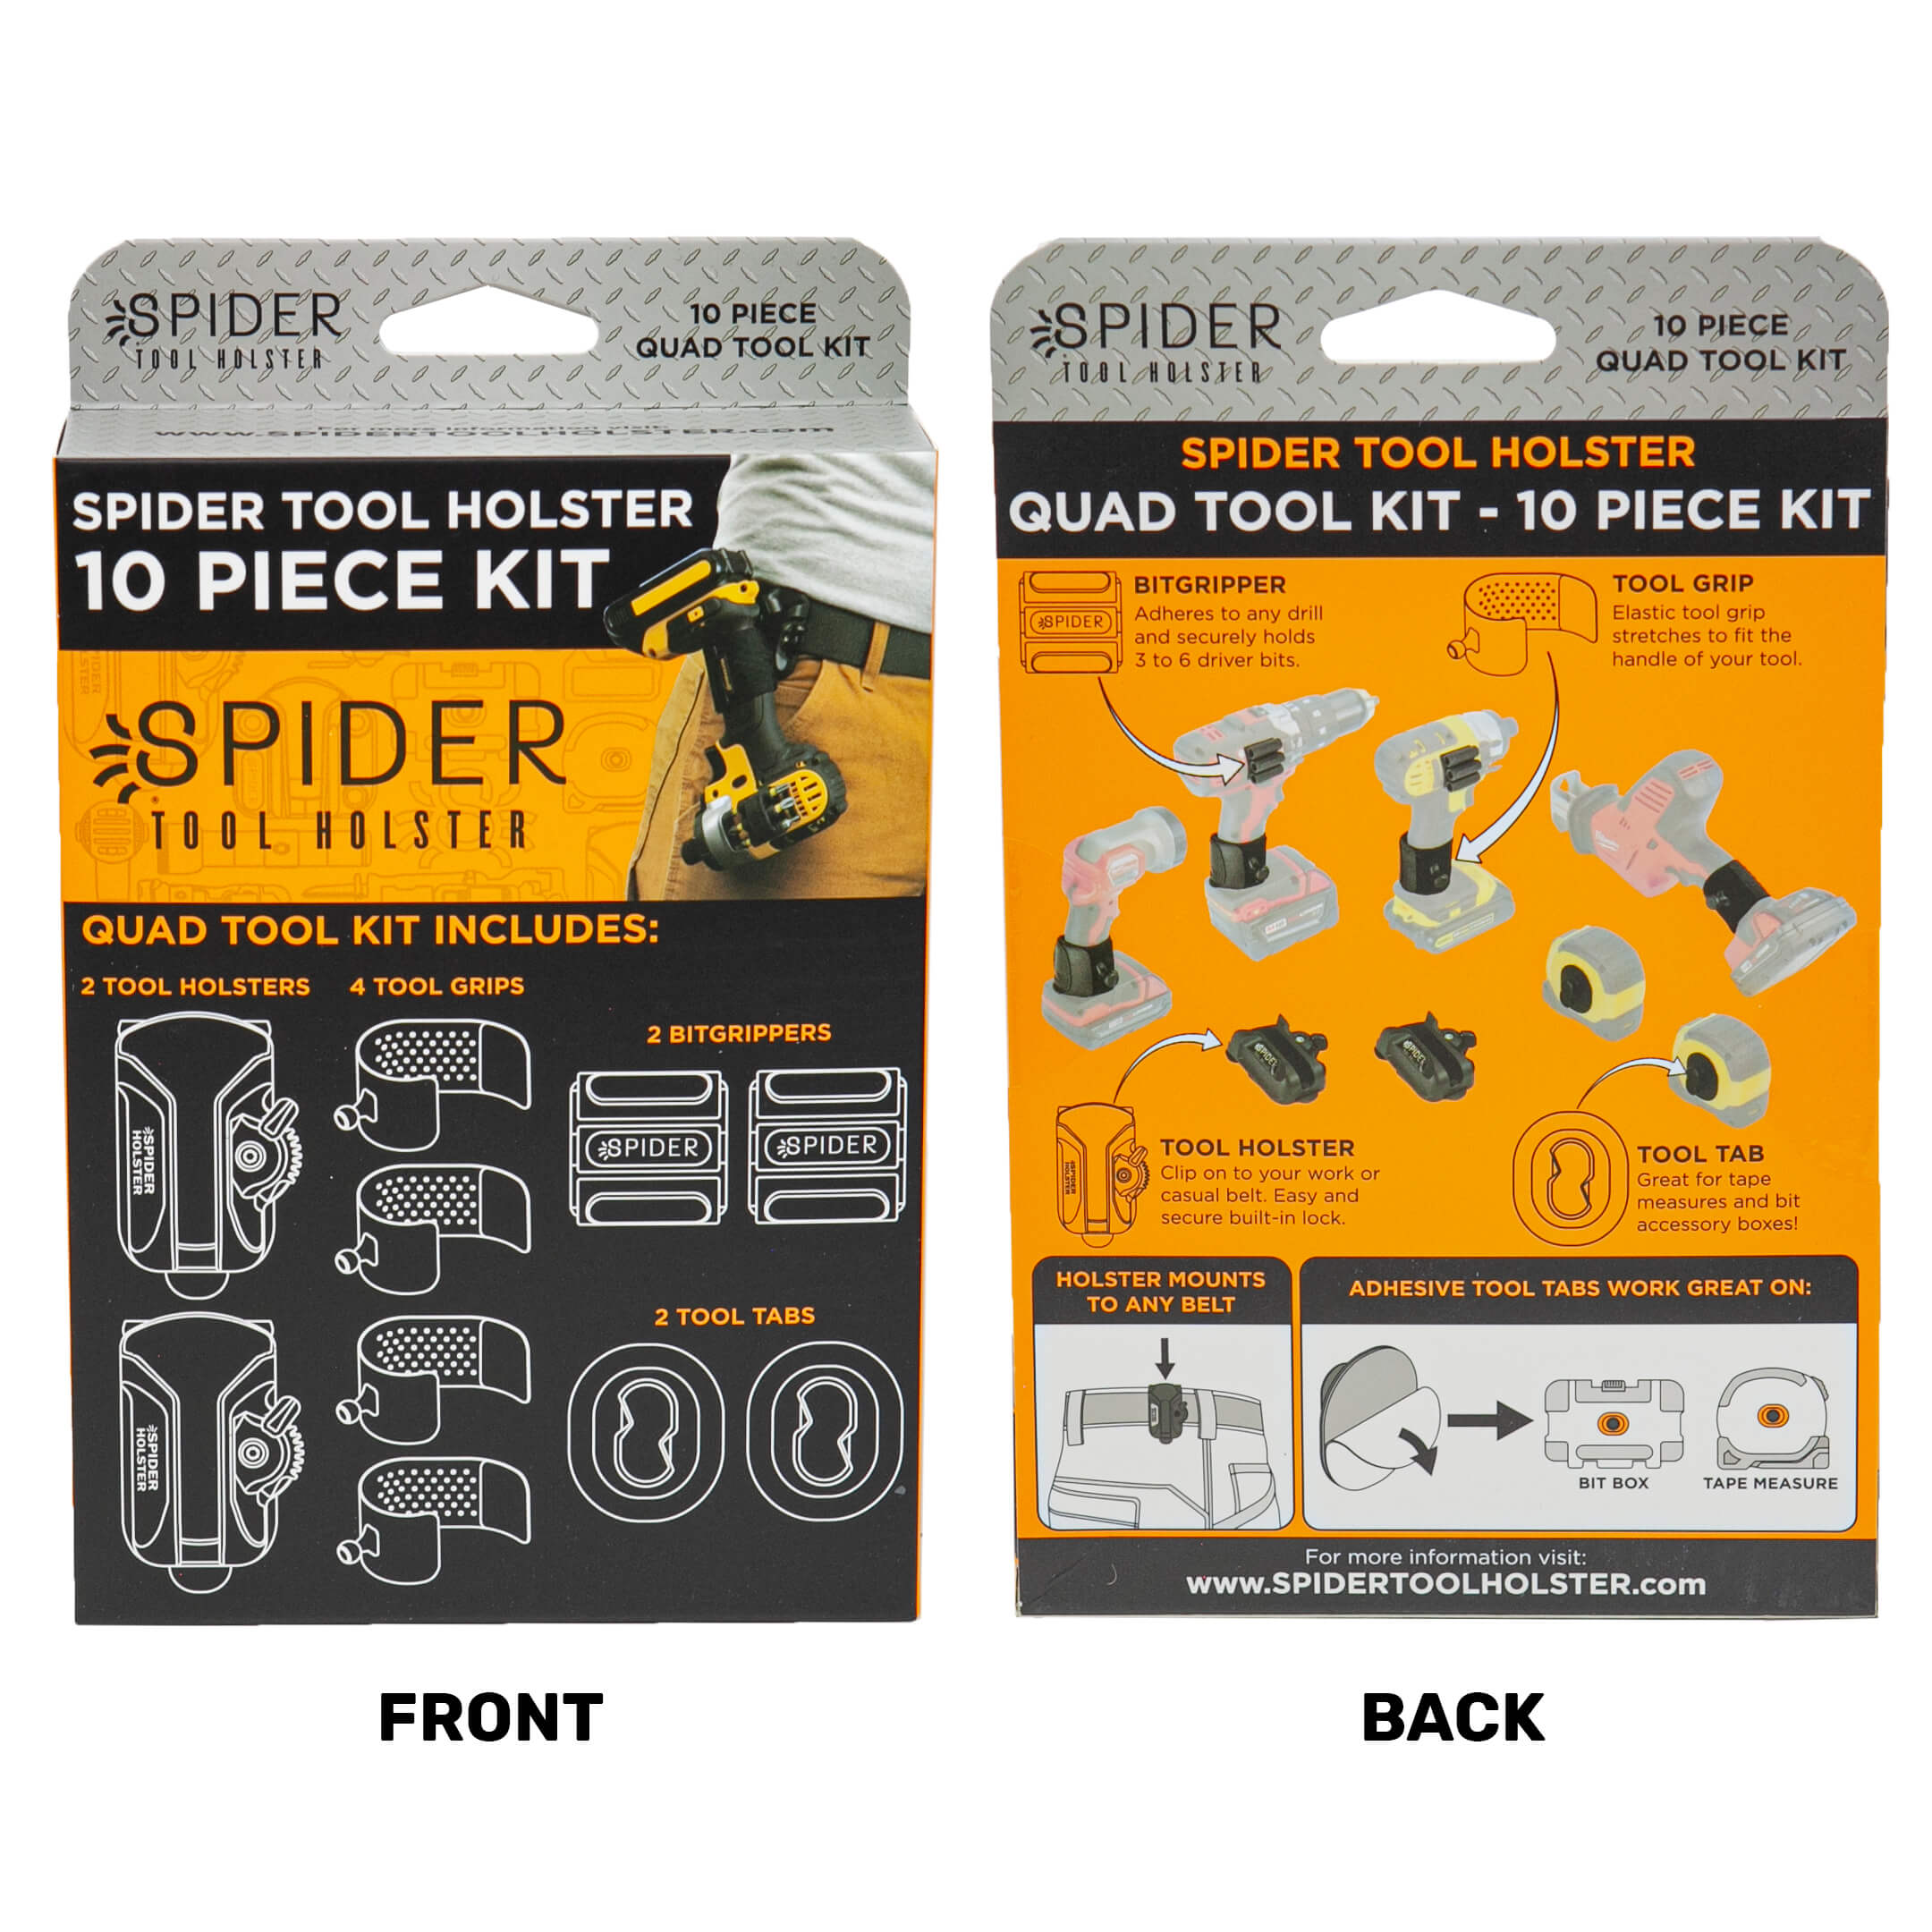 Quad Tool Kit - 10 Piece Kit - Spider Tool Holster